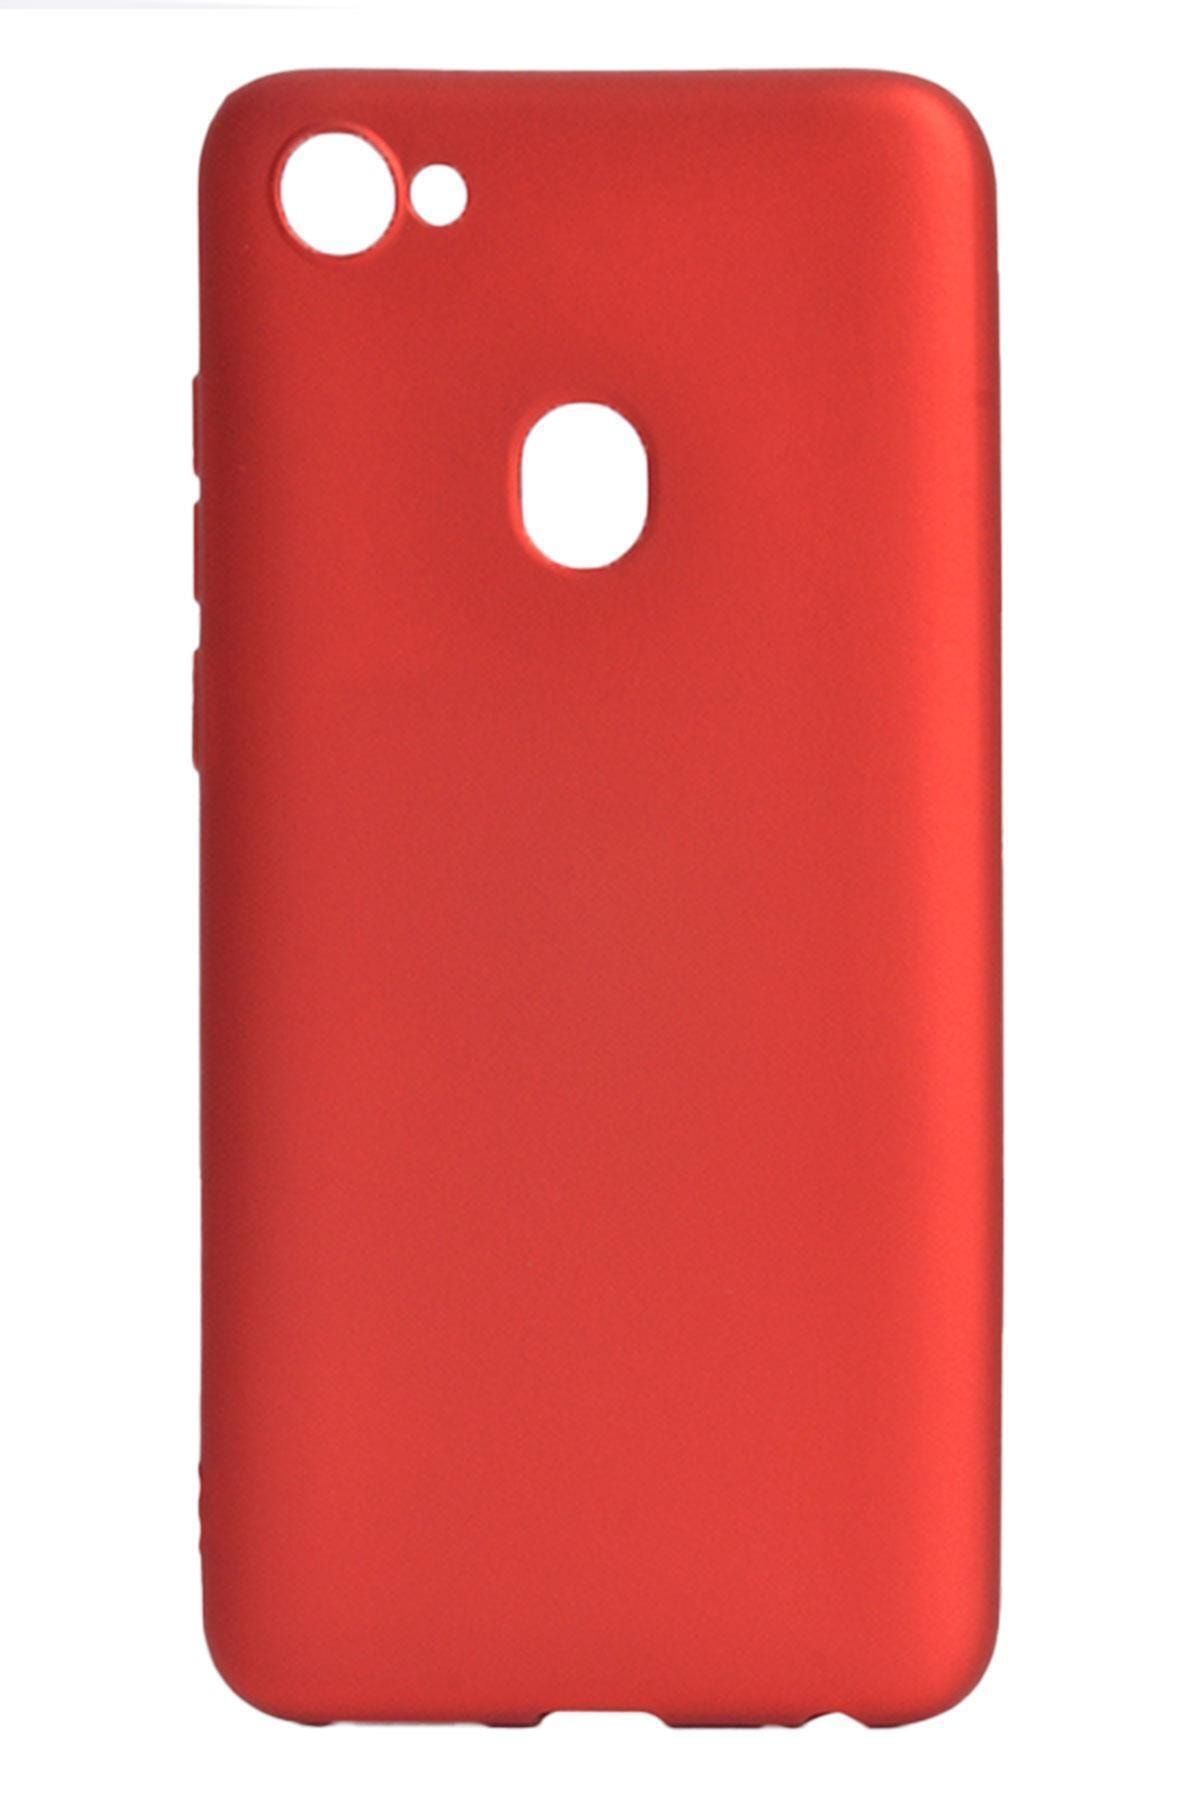 Casper Via G3 Kılıf Premier Renkli Esnek Silikon Kırmızı